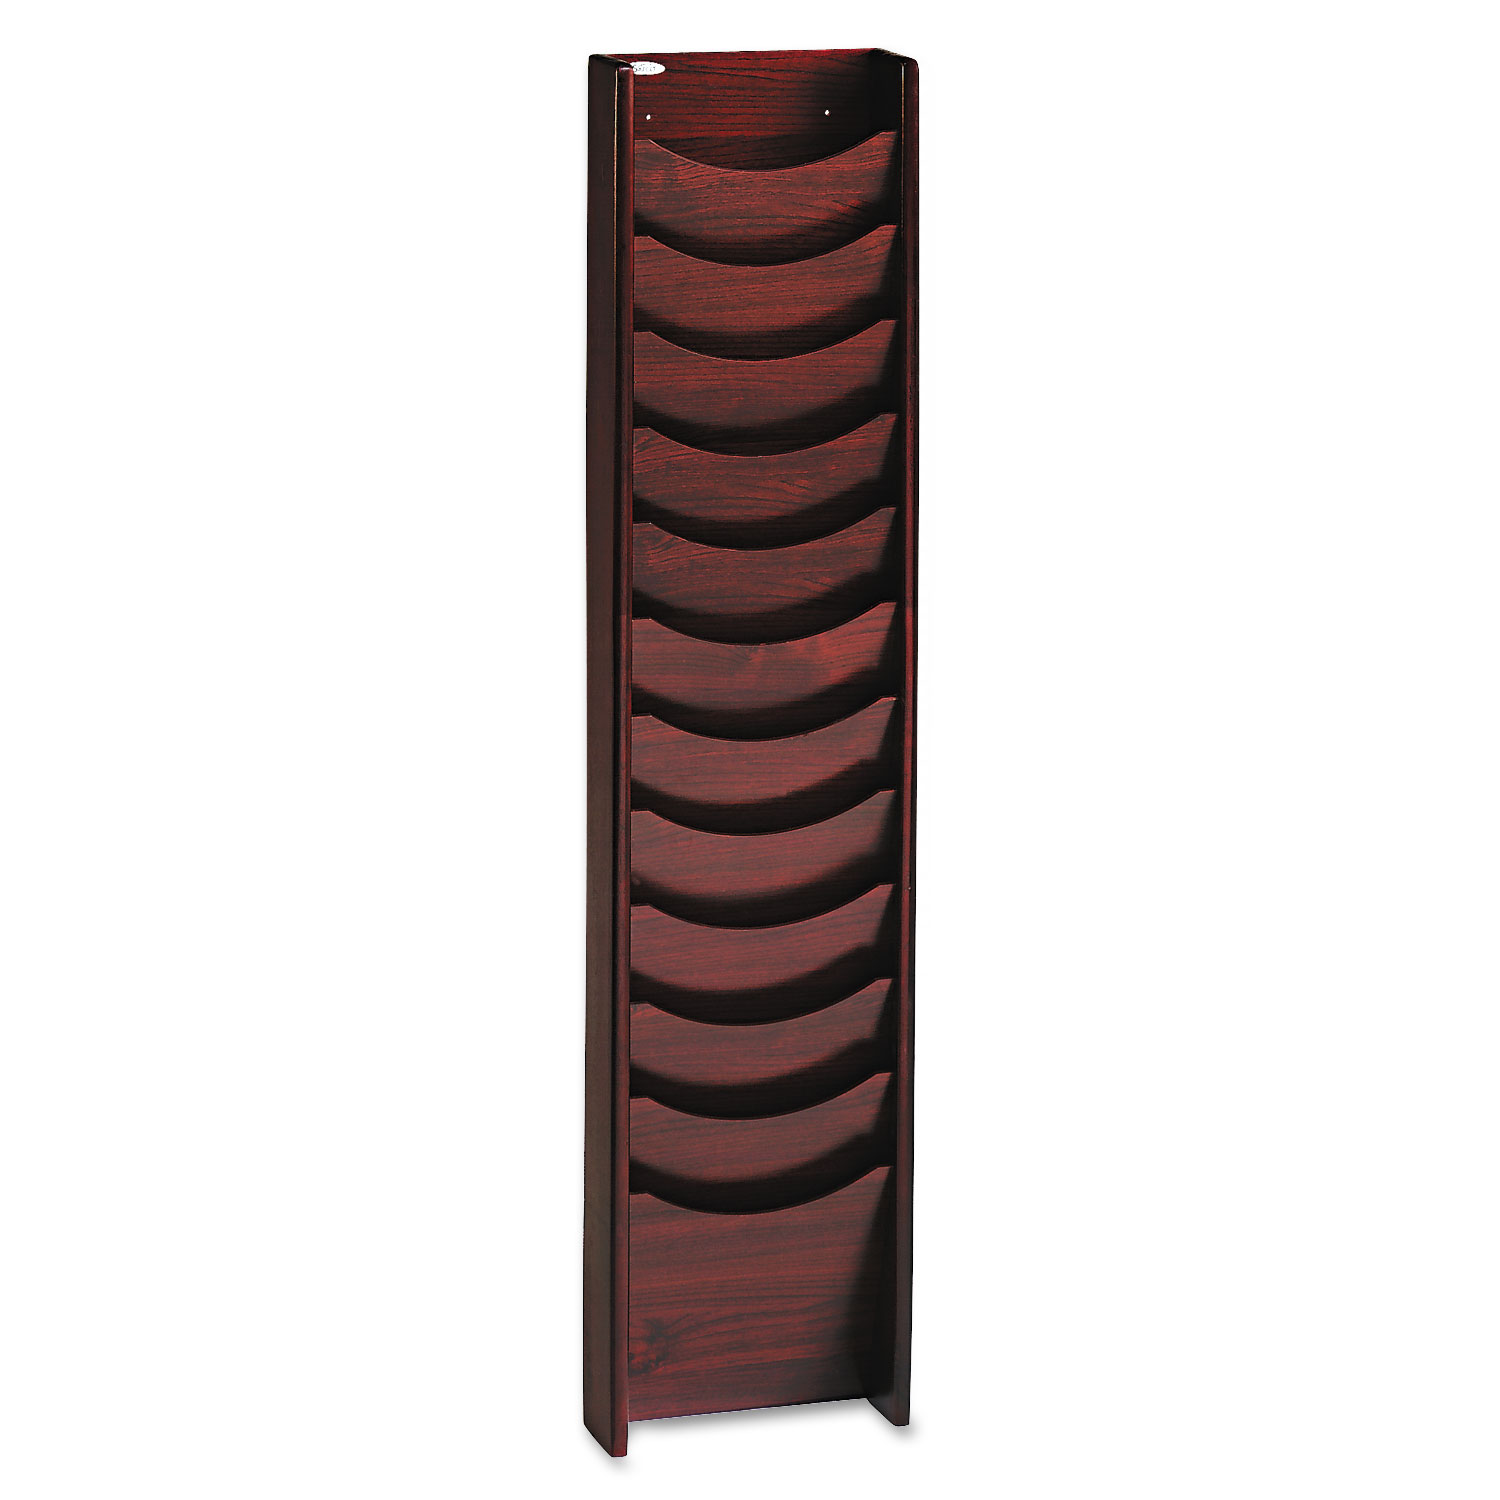 Solid Wood Wall-Mount Literature Display Rack, 11-1/4w x 3-3/4d x 48h, Mahogany